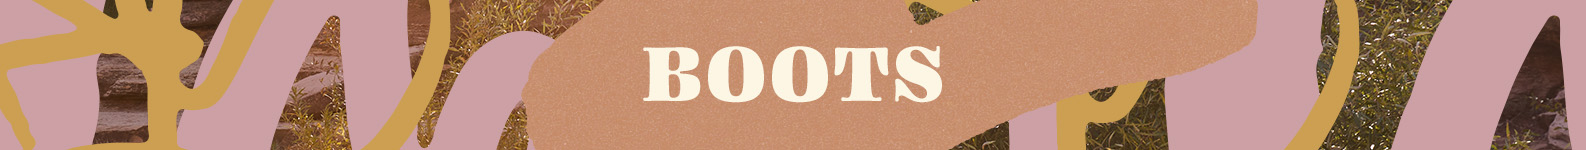 Boots header image